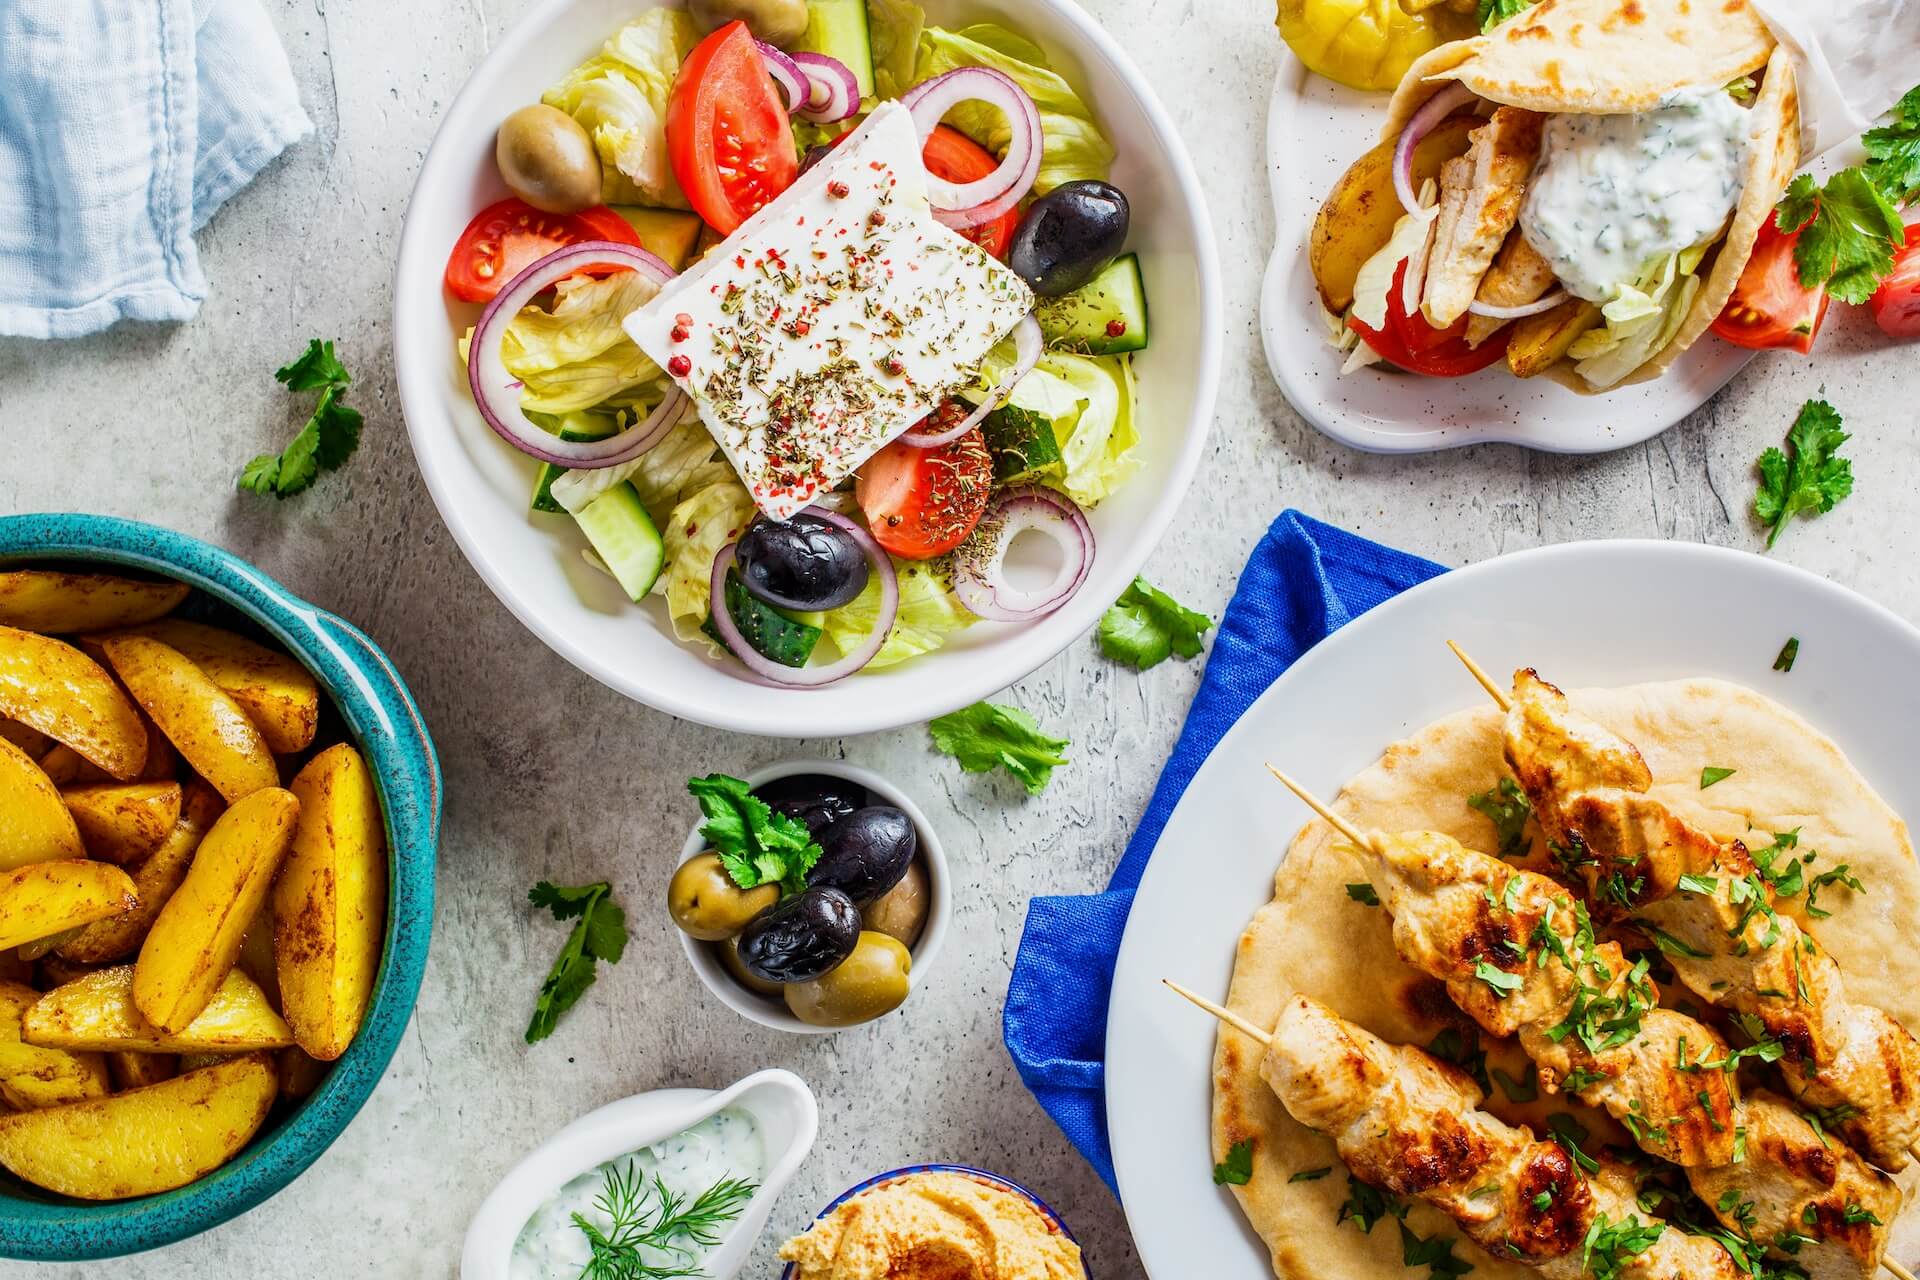 Greek salad, baked potatoes, and souvlaki